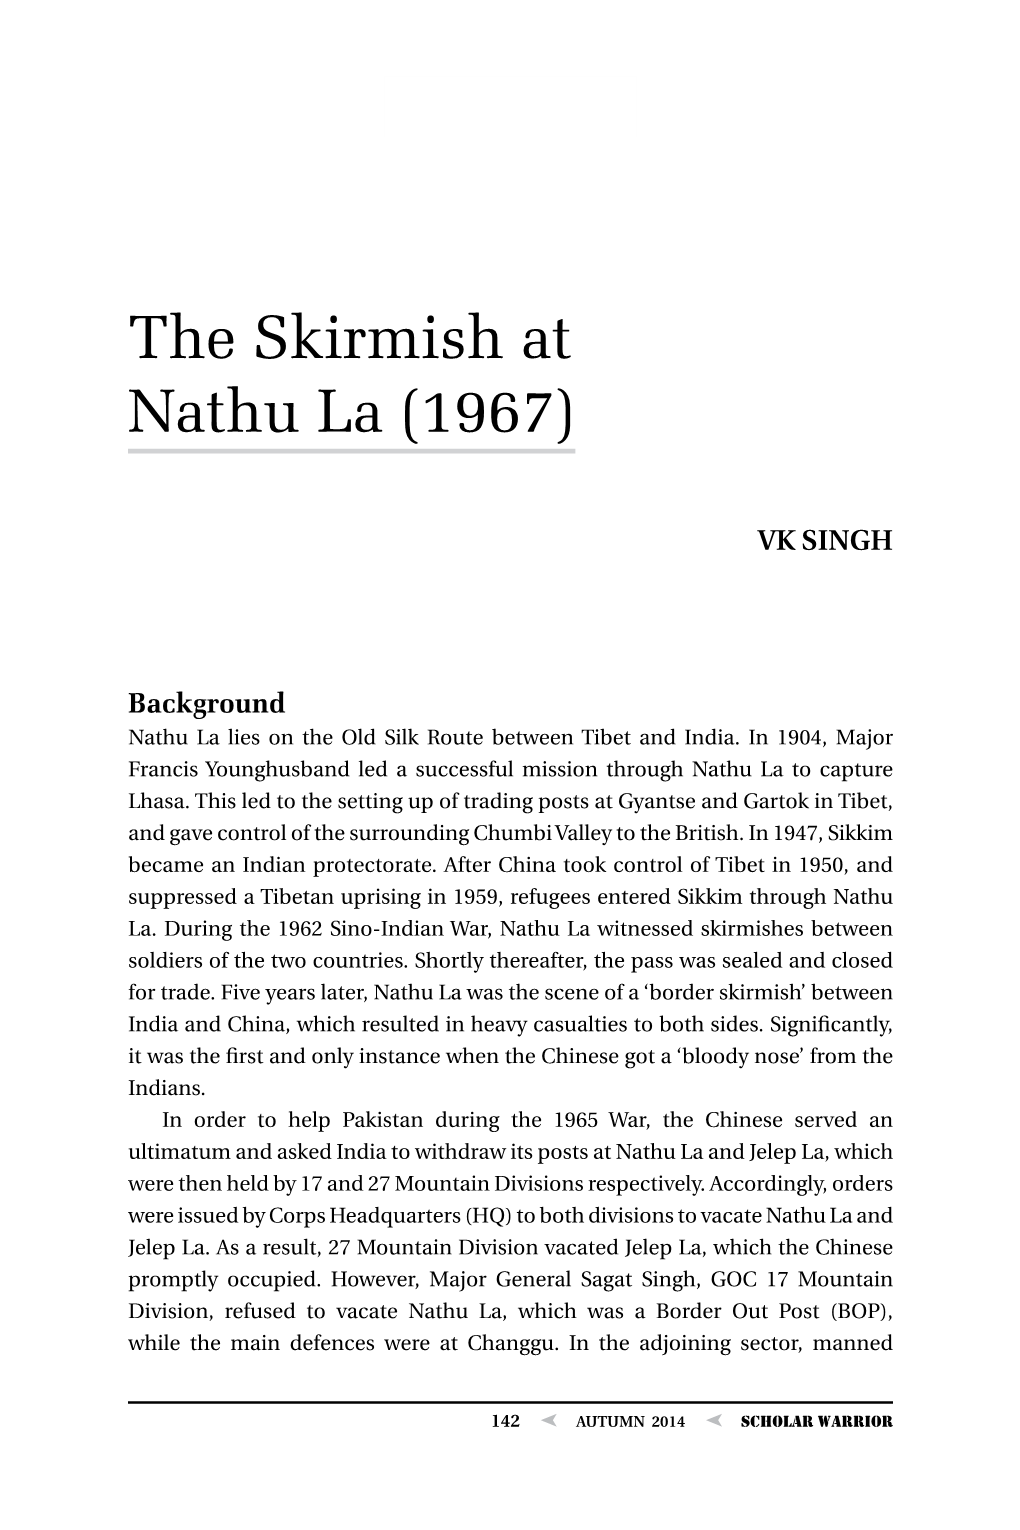 The Skirmish at Nathu La (1967), by V K Singh